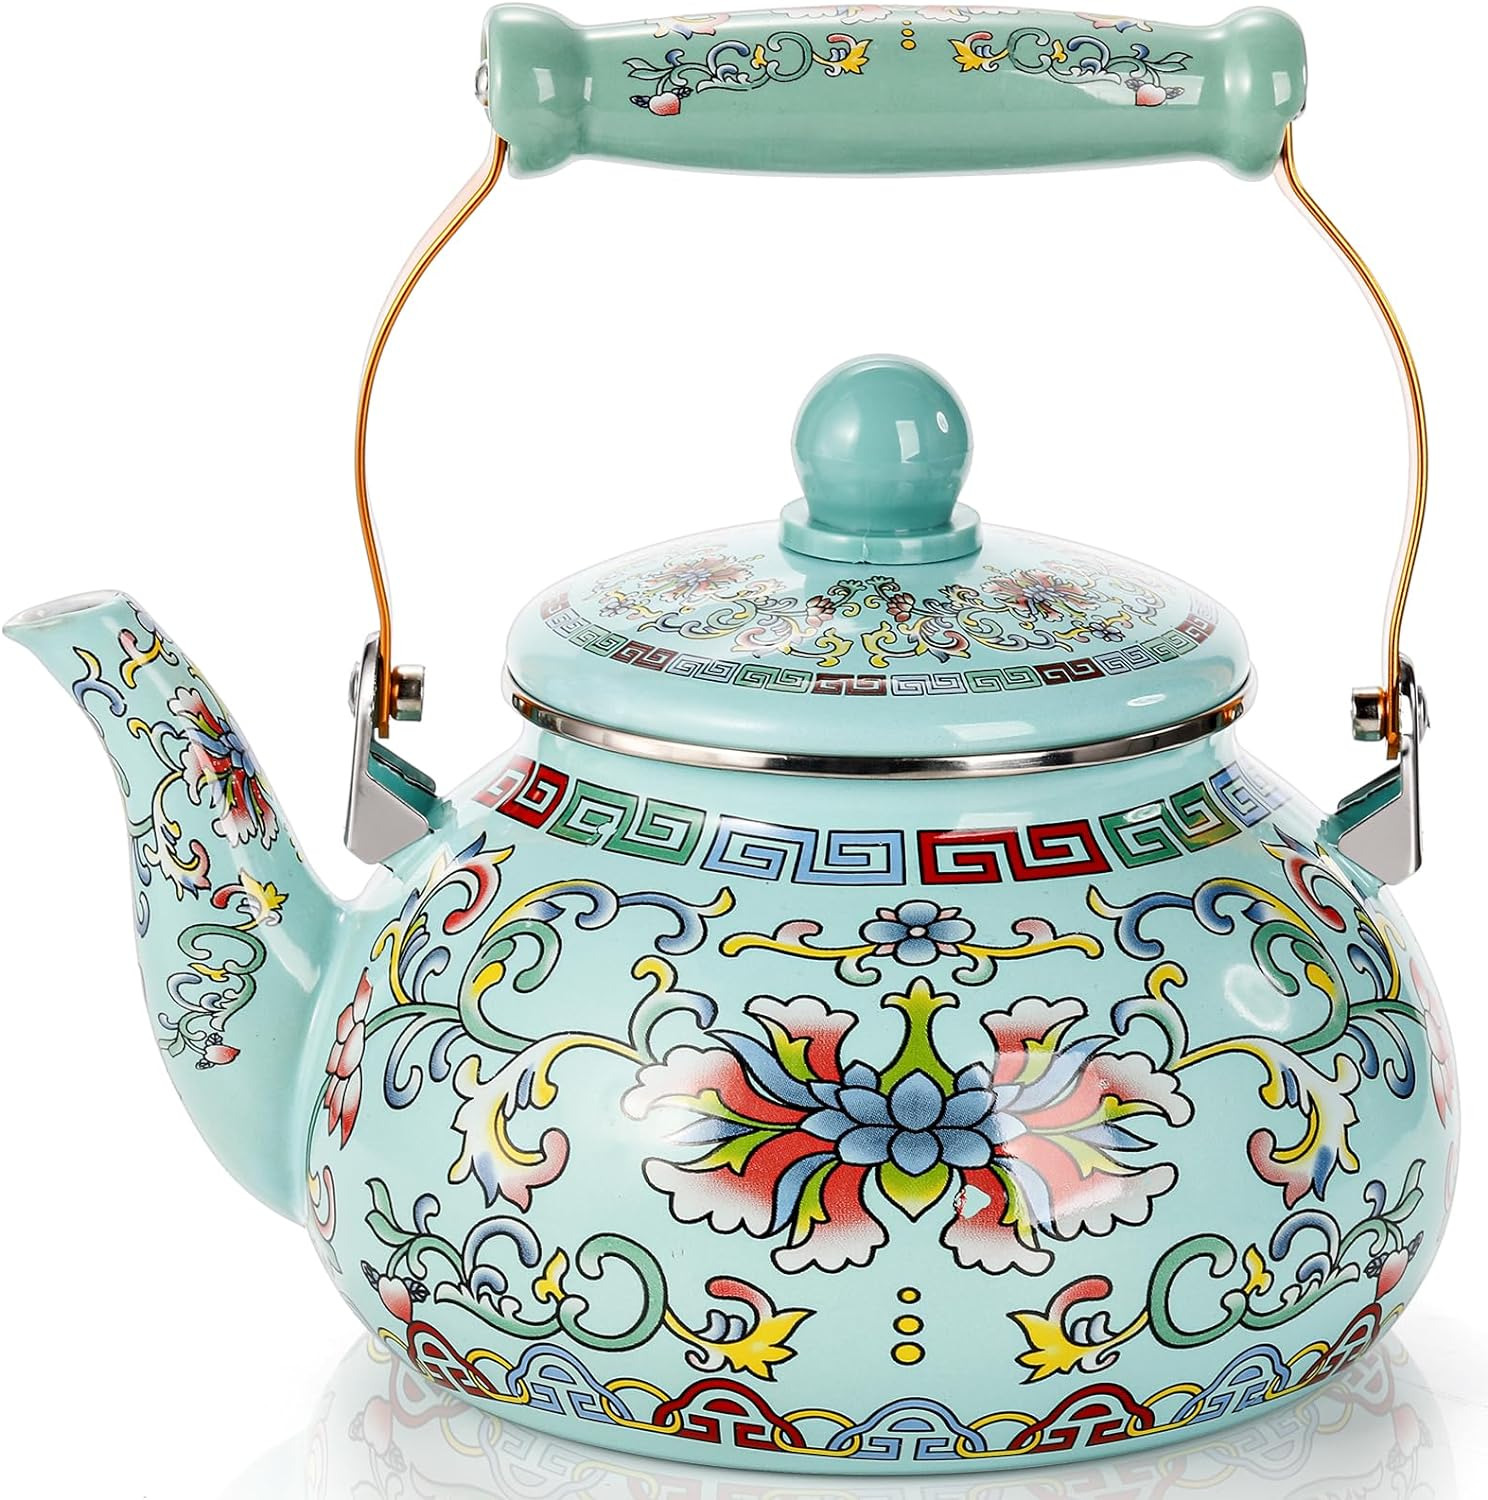 2.6 Quart Vintage Enamel Tea Kettle Large Enameled Floral Teapot Flower Enamel